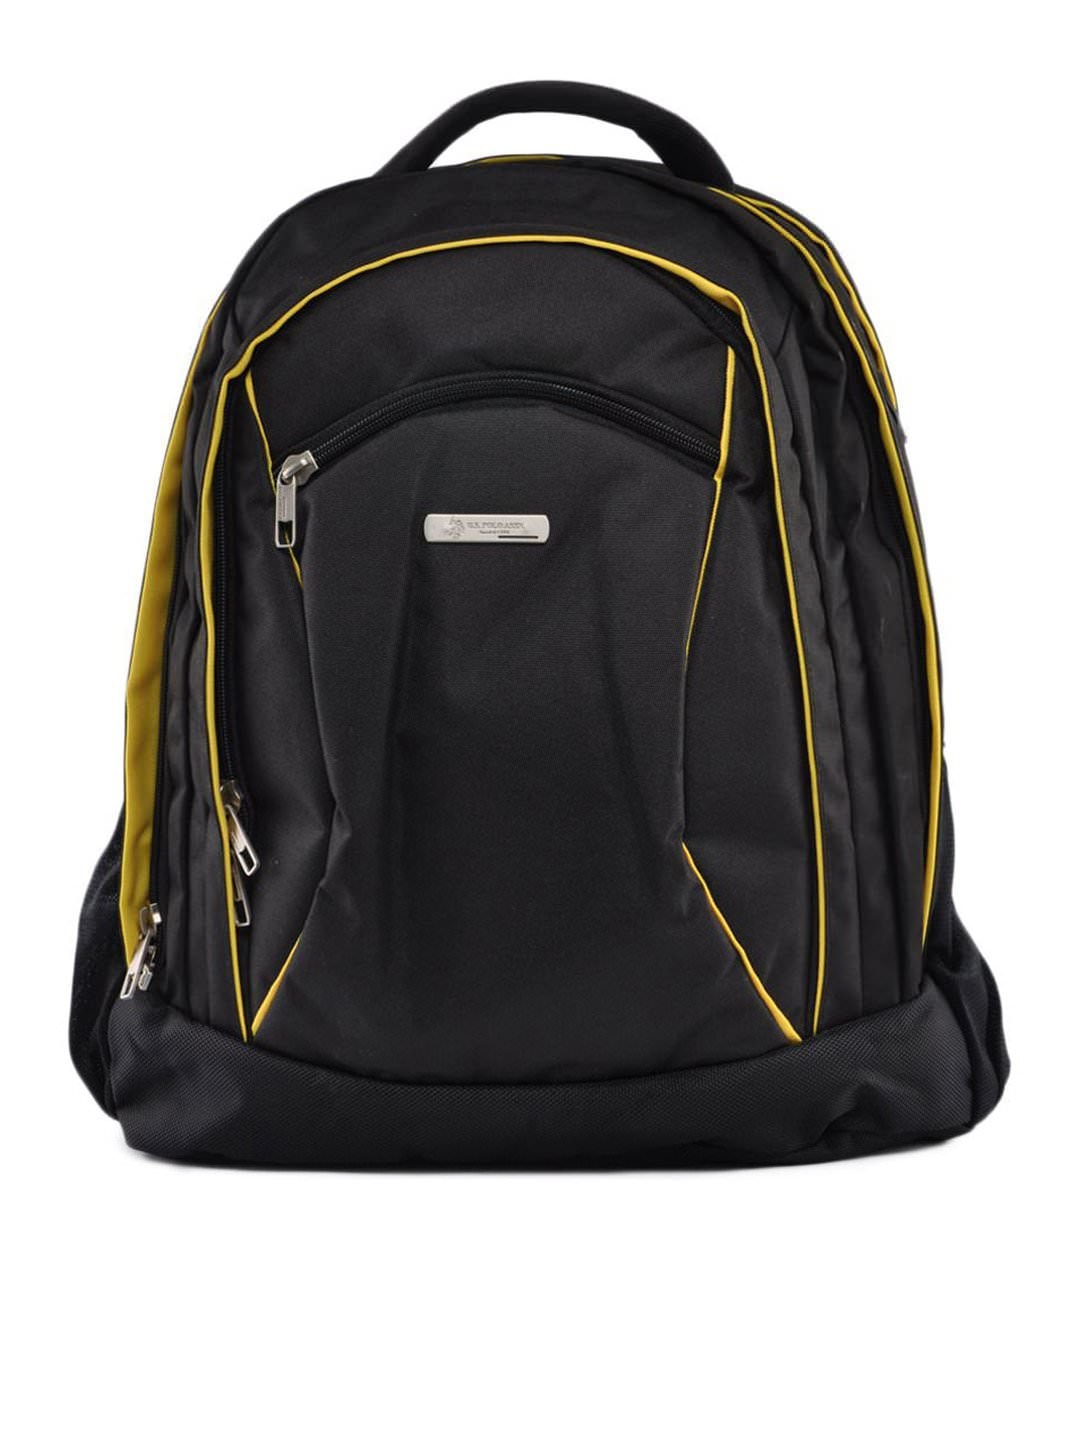 U.S. Polo Assn. Black Unisex Lug-Laptop Backpacks